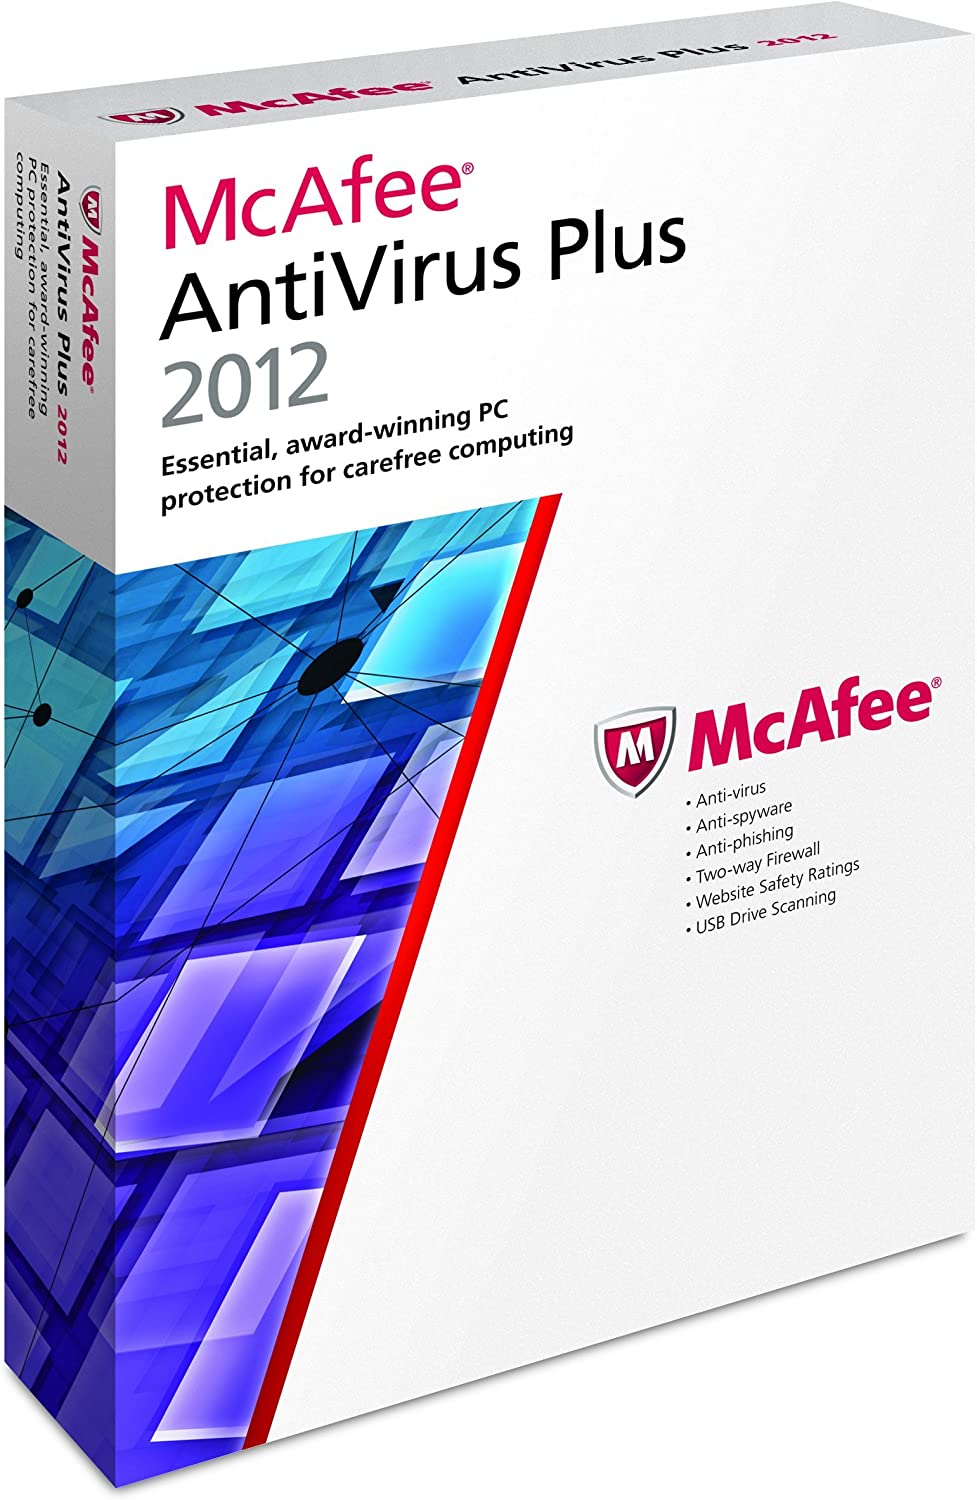 mcafee antivirus plus download 2012